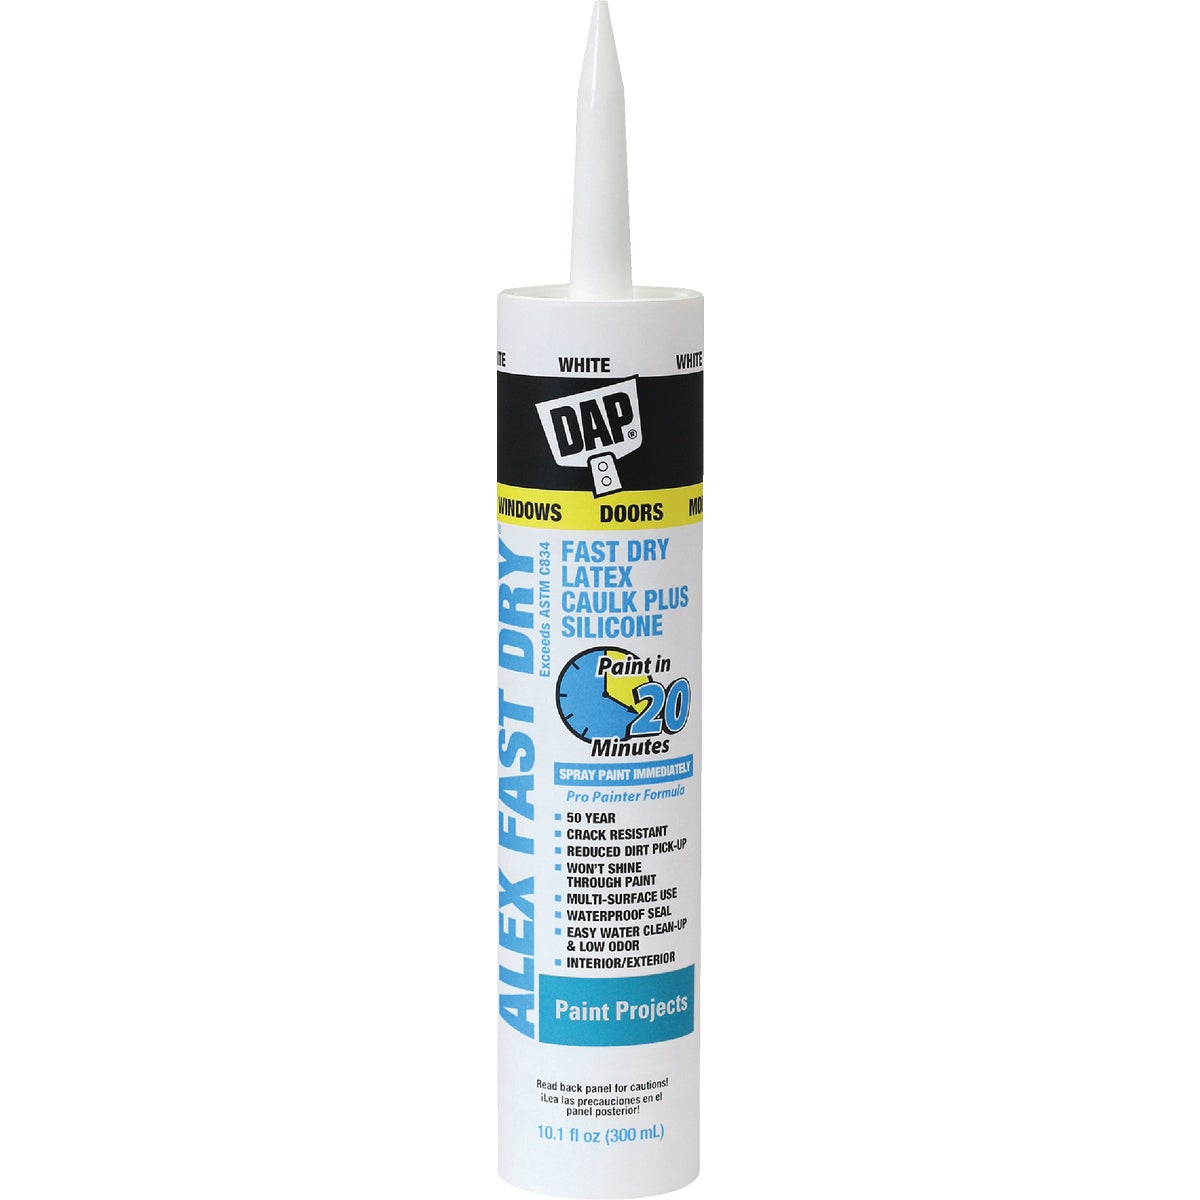 Item 779852, DAP Alex Fast Dry Acrylic Latex Caulk Plus Silicone is specifically 